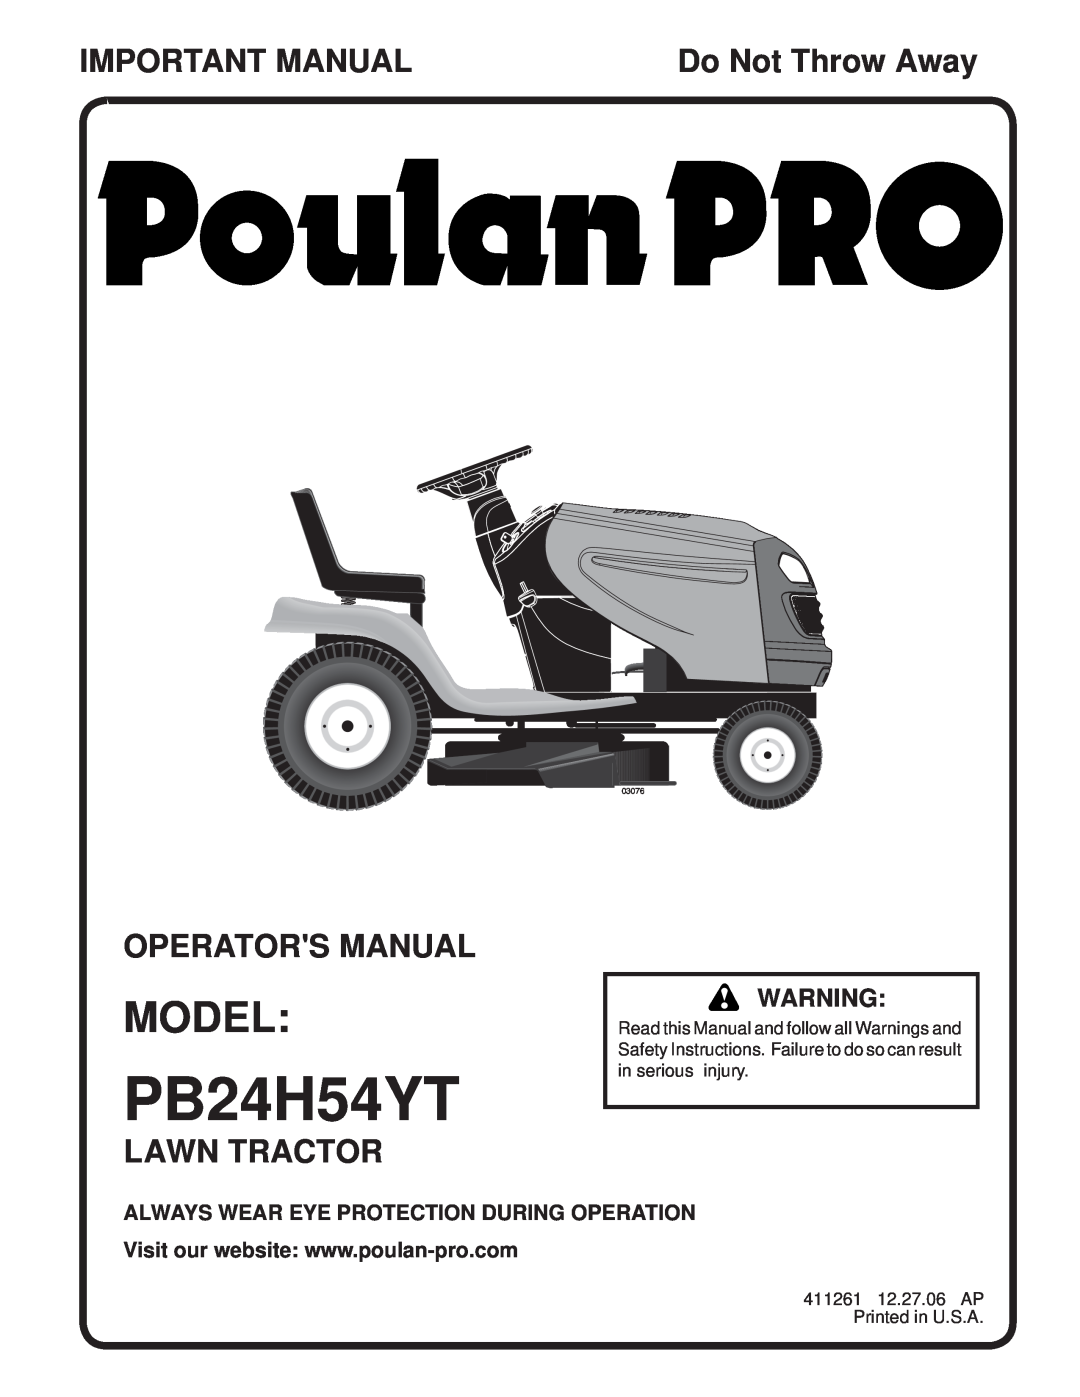 Poulan PB24H54YT manual Model, Important Manual, Operators Manual, Lawn Tractor, Do Not Throw Away, 03076 